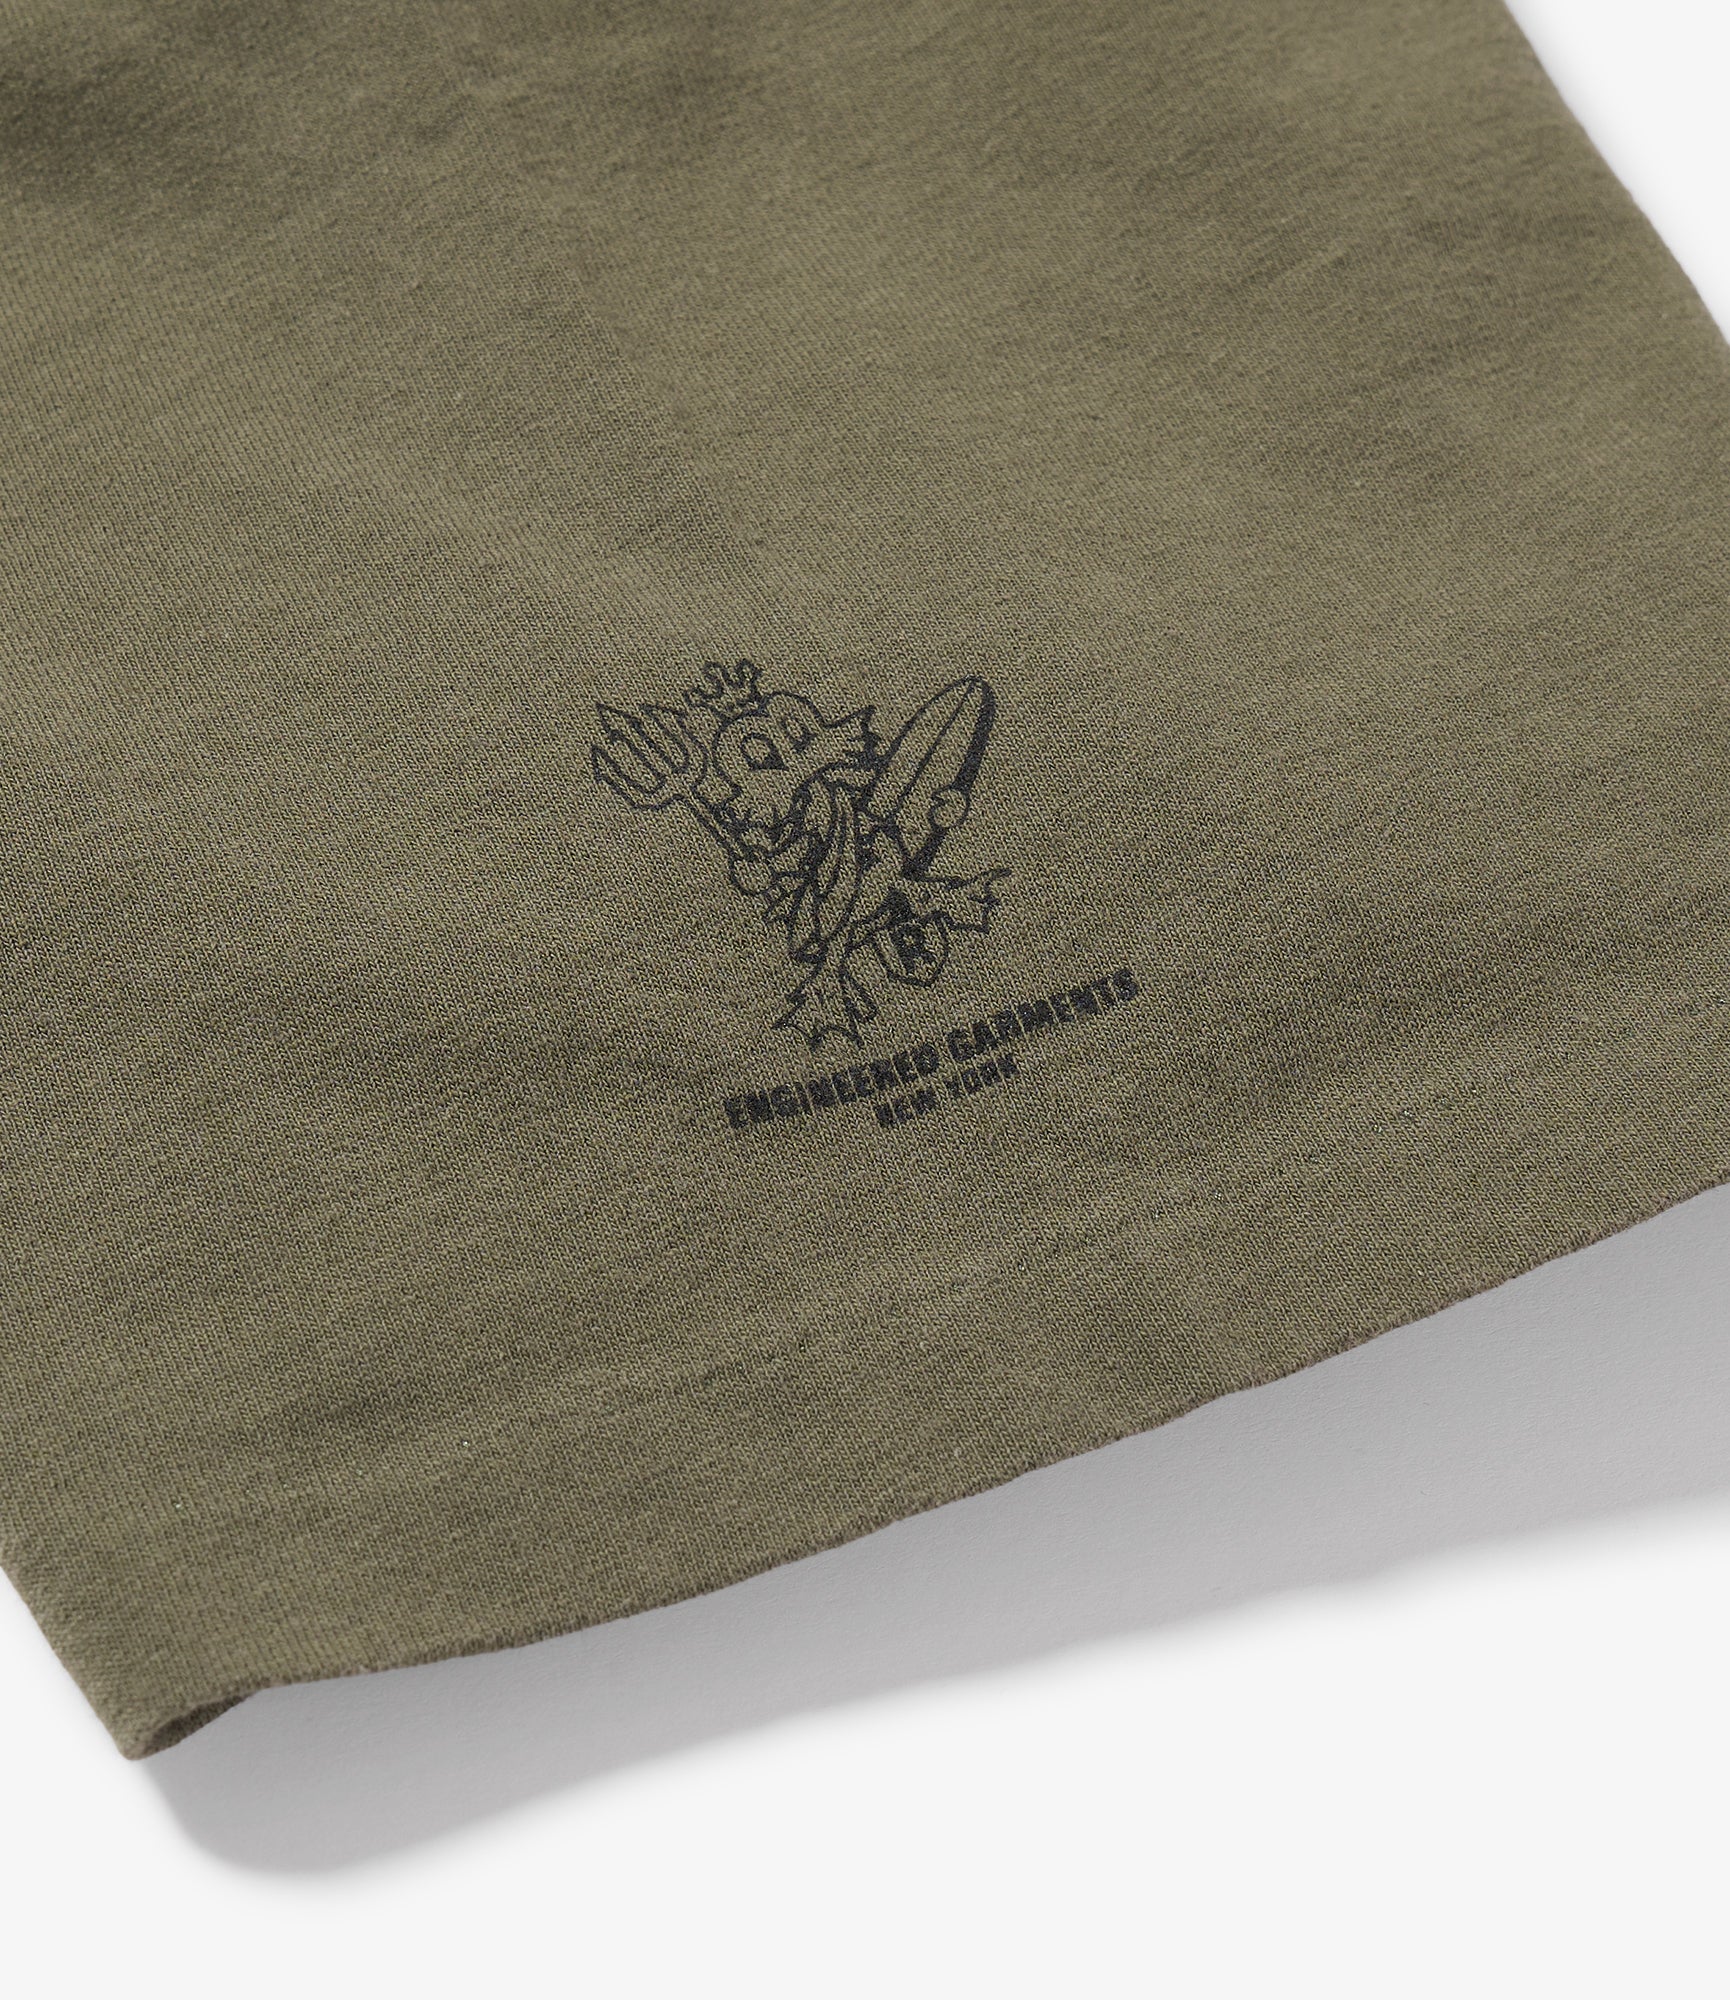 Printed Cross Crew Neck Pocket T-shirt - Olive - Absurdist